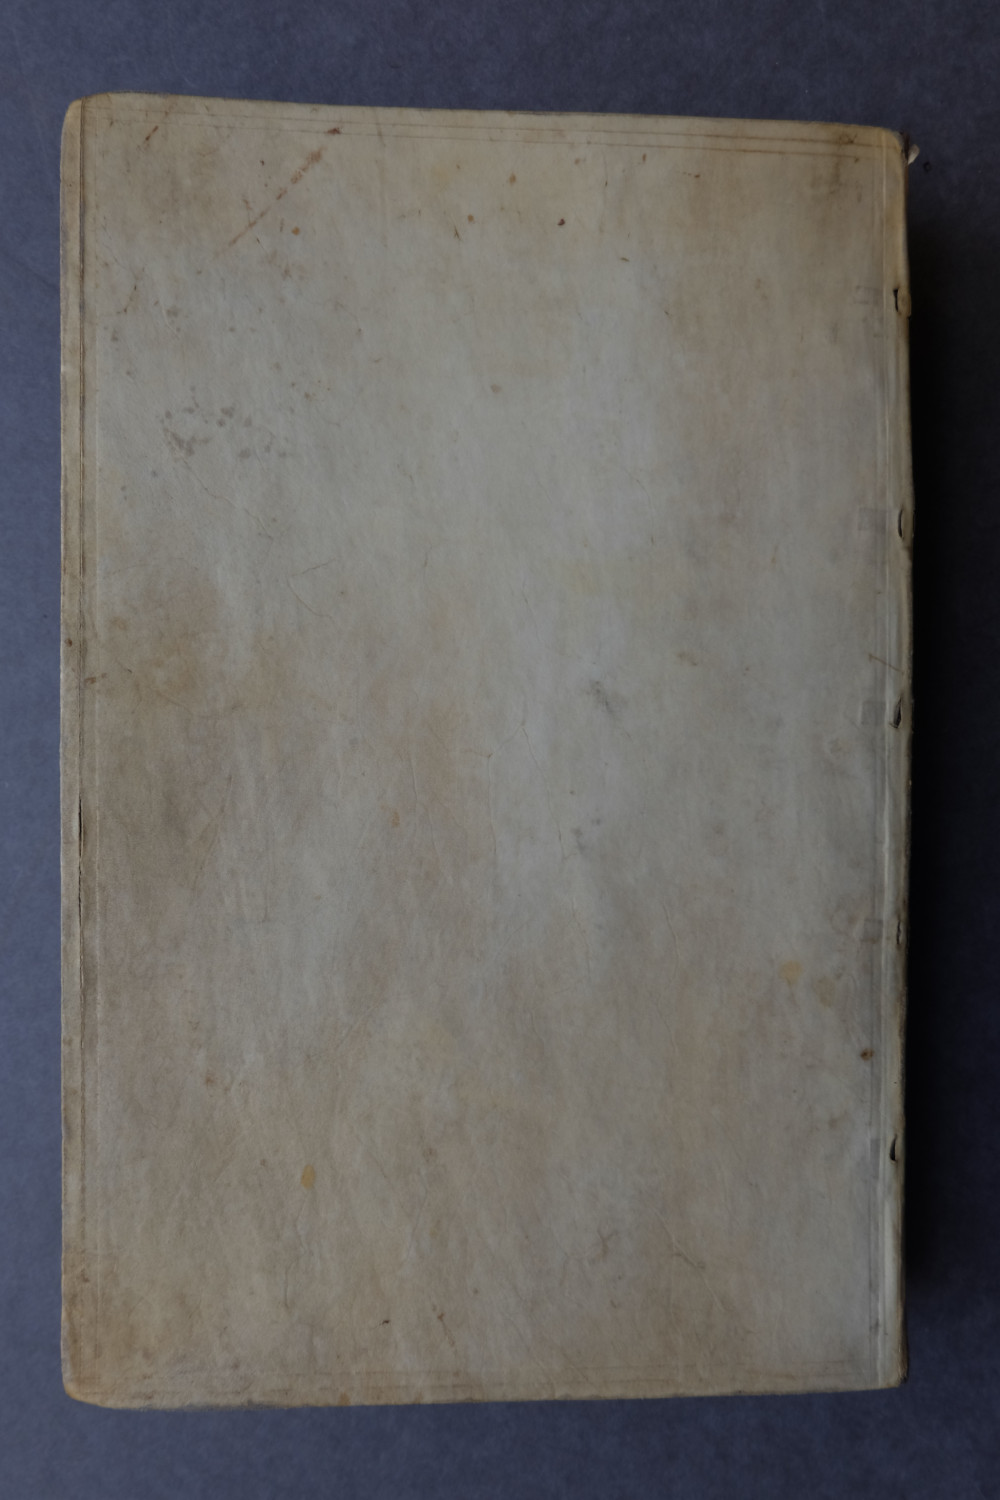 Folio 109 versoBinding